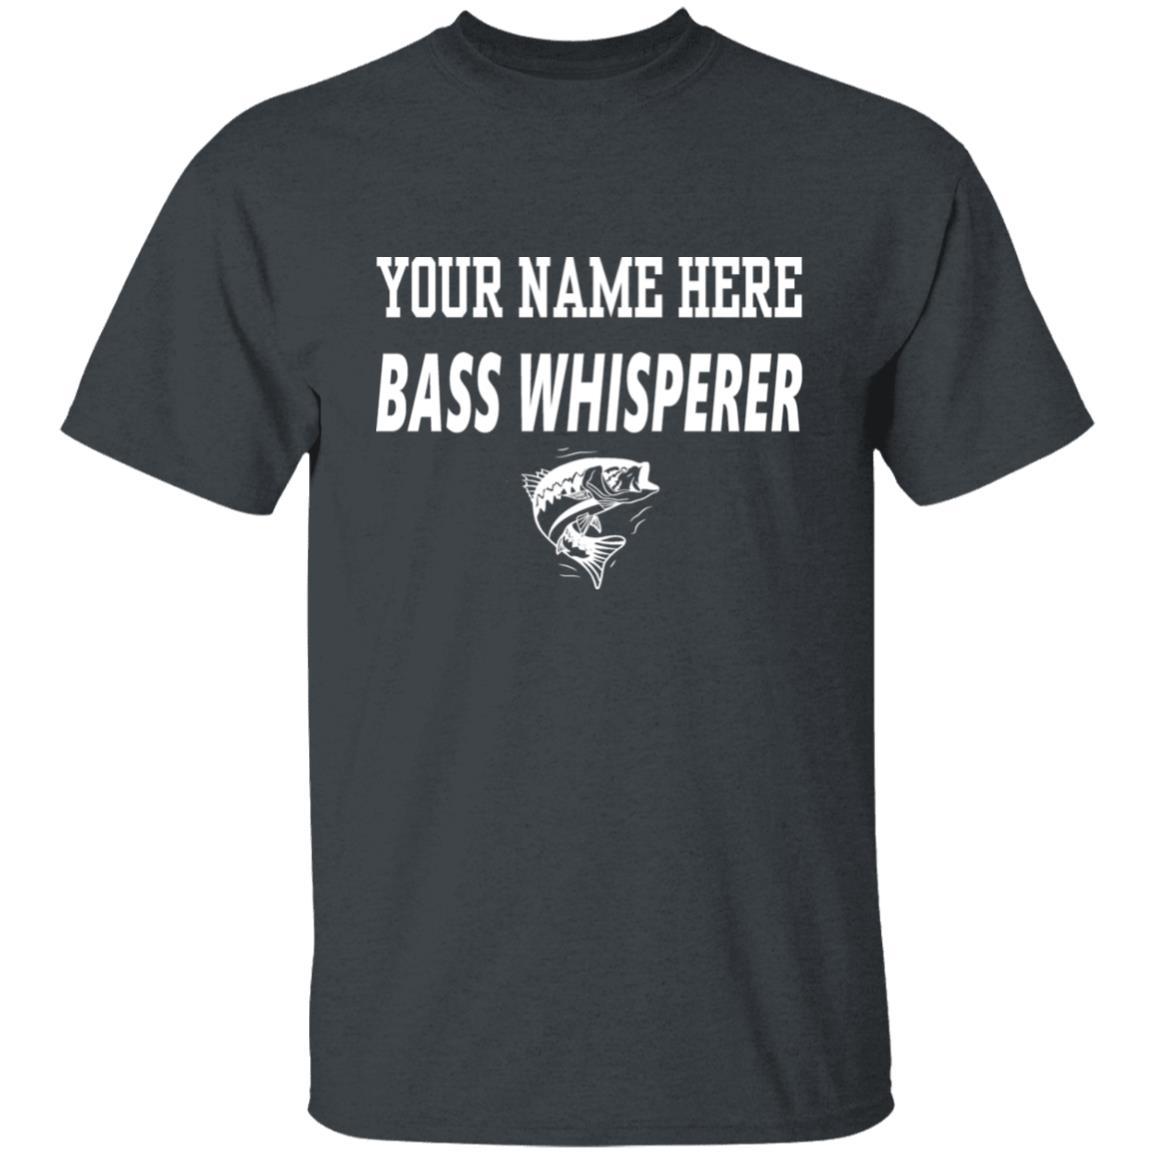 Personalized bass whisperer t shirt w dark-heather